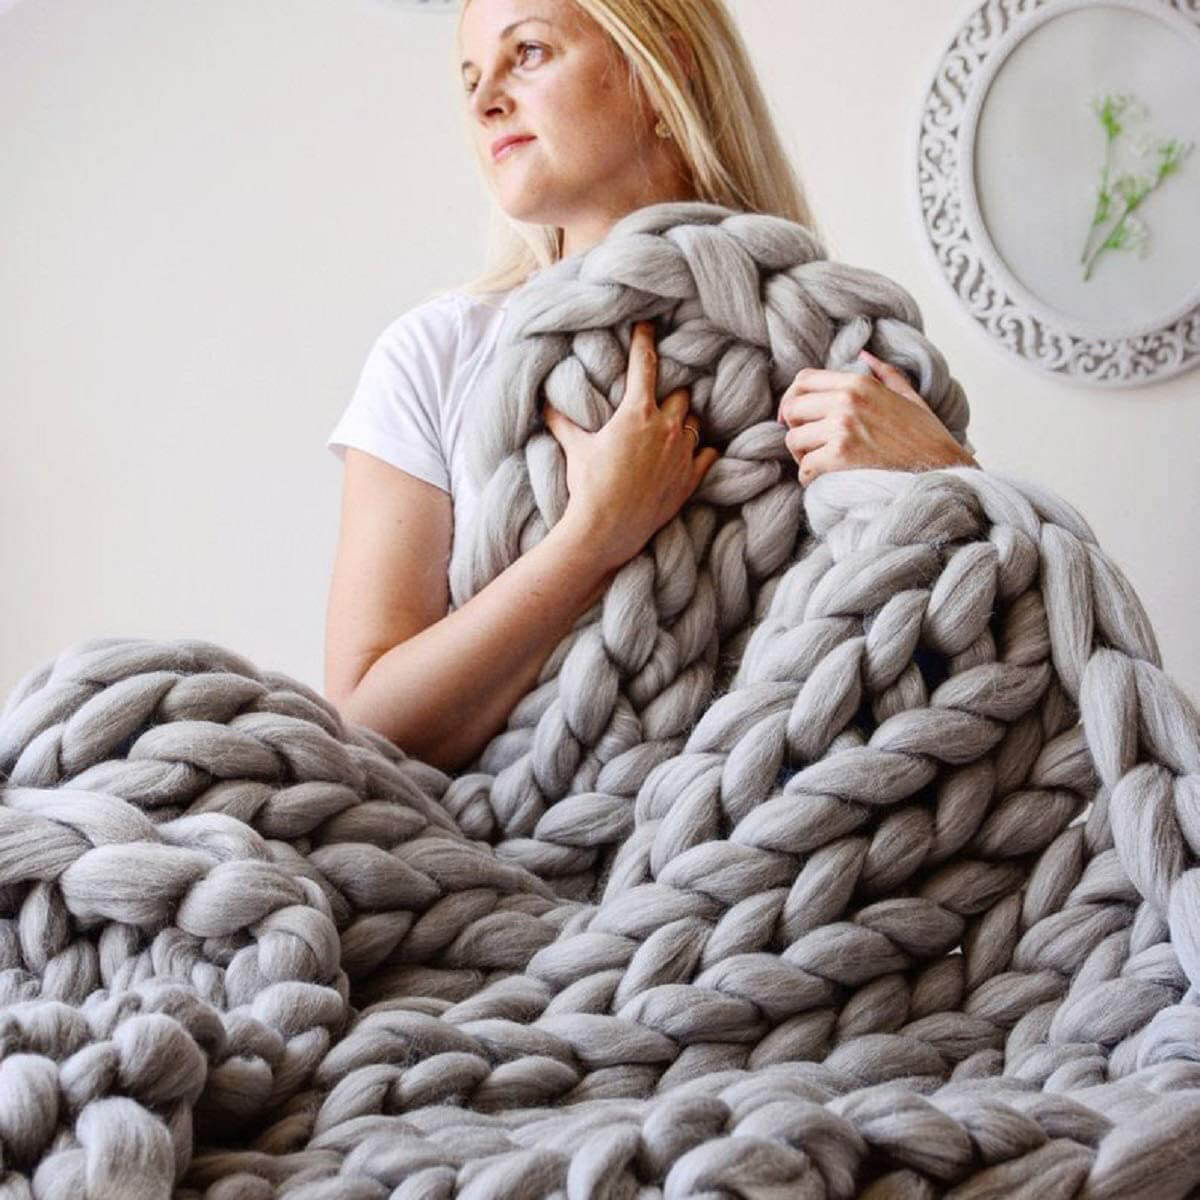 Super Chunky Knit Blanket, Chunky Knits, Merino Wool Blanket, Knitted  Blanket, Chunky Yarn, Arm Knitted Blanket From Merino Wool 